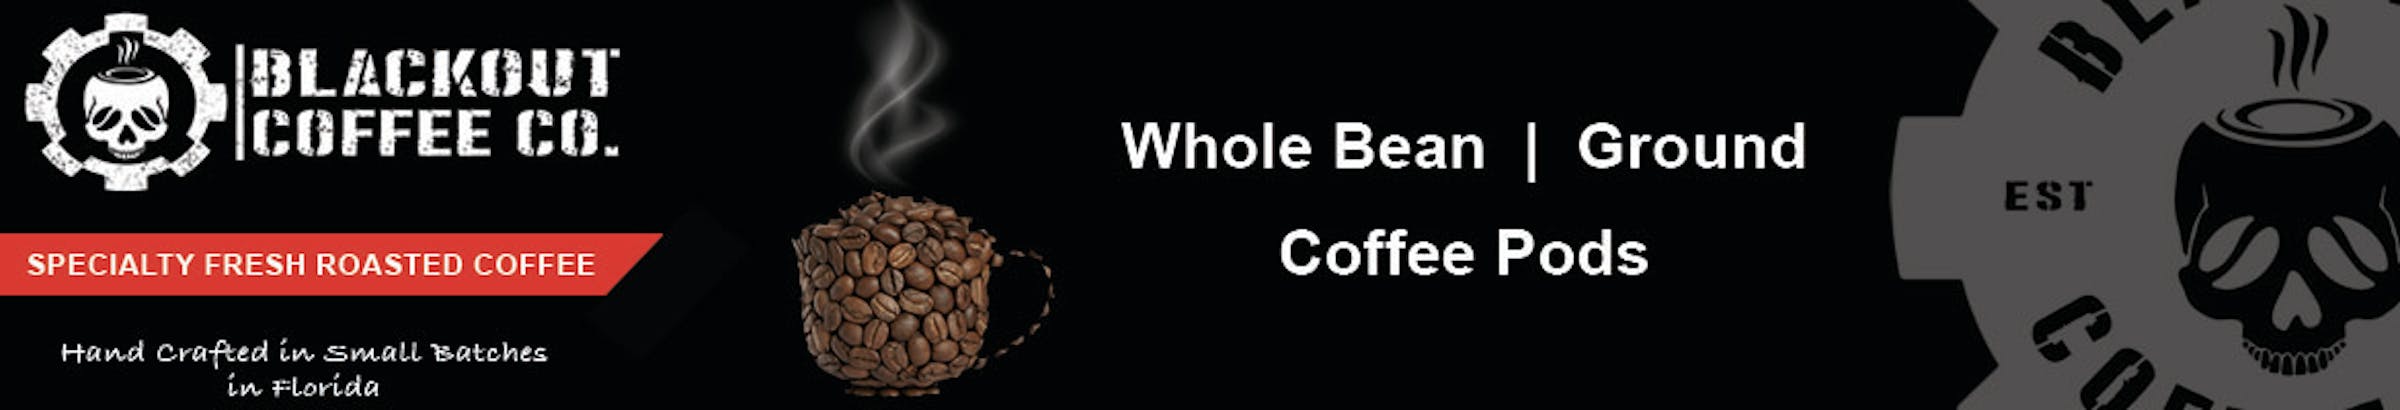 https://judgeme.imgix.net/g/blackout-coffee-co/1598543077__Blackout-Coffee-Banner-12345__original.jpg?auto=format&w=2400